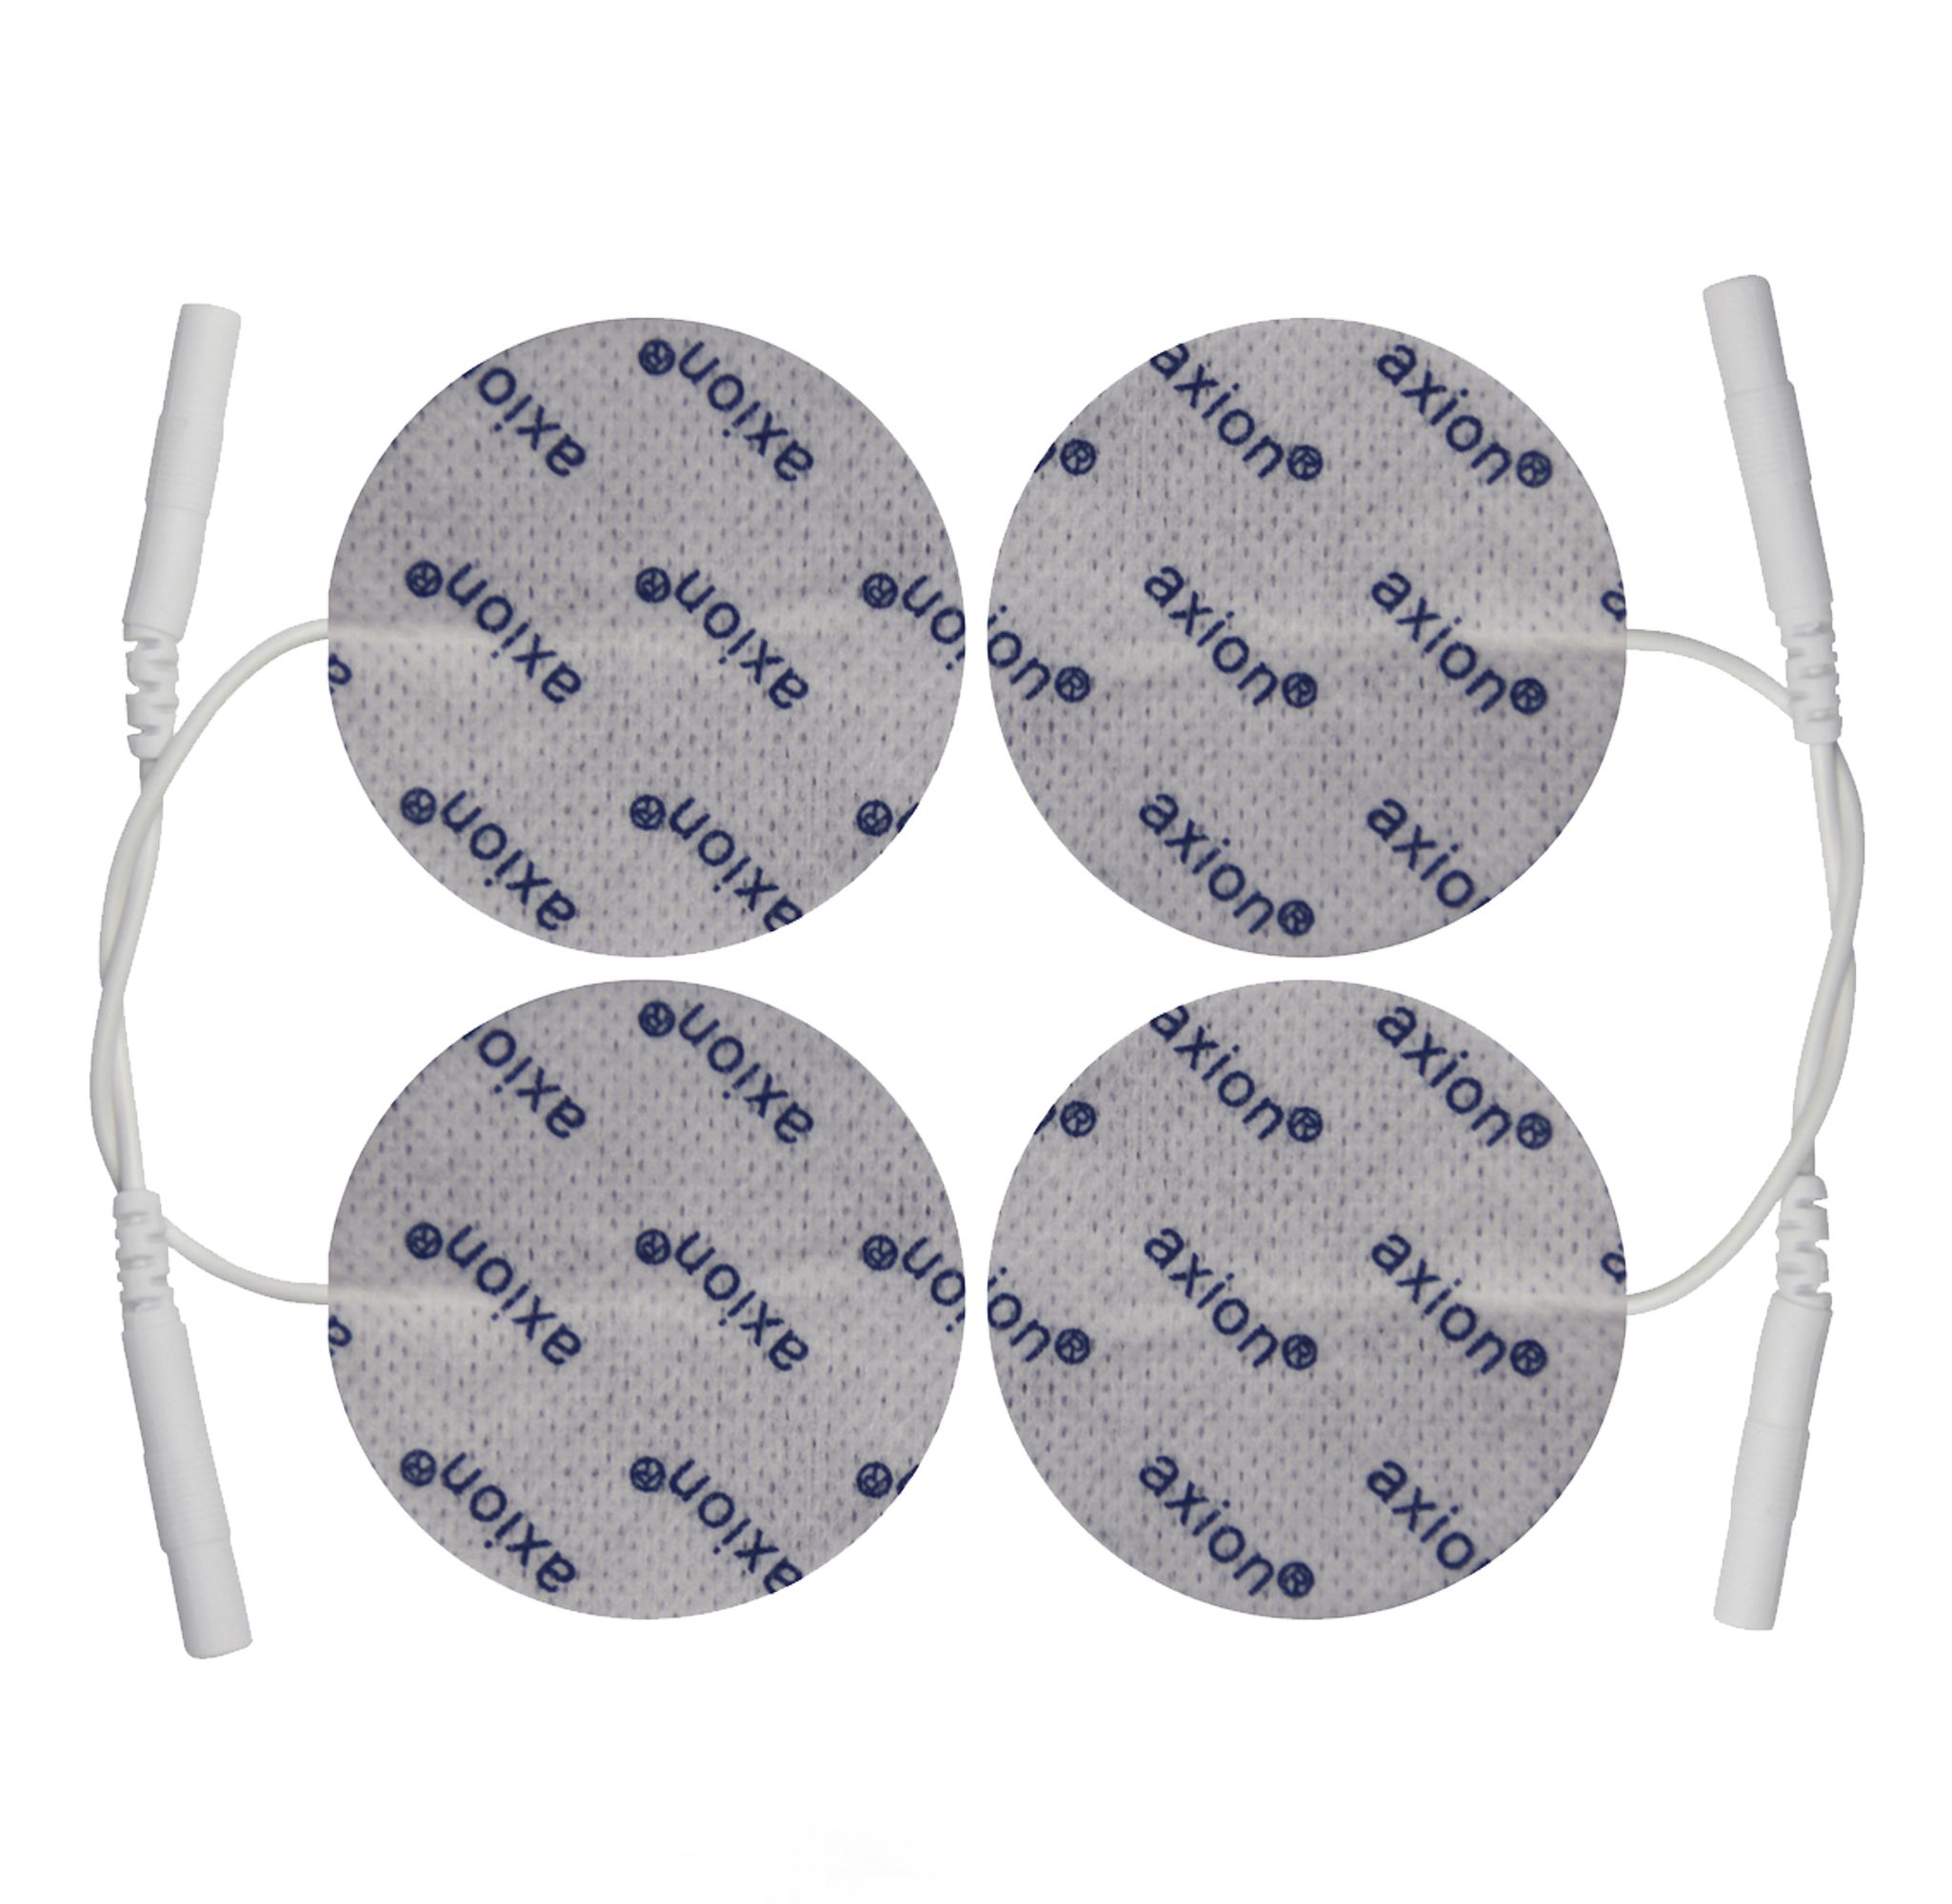 axion selbstklebende Elektrodenpads rund 5,0 cm – passend zu axion, Prorelax, Promed, etc.